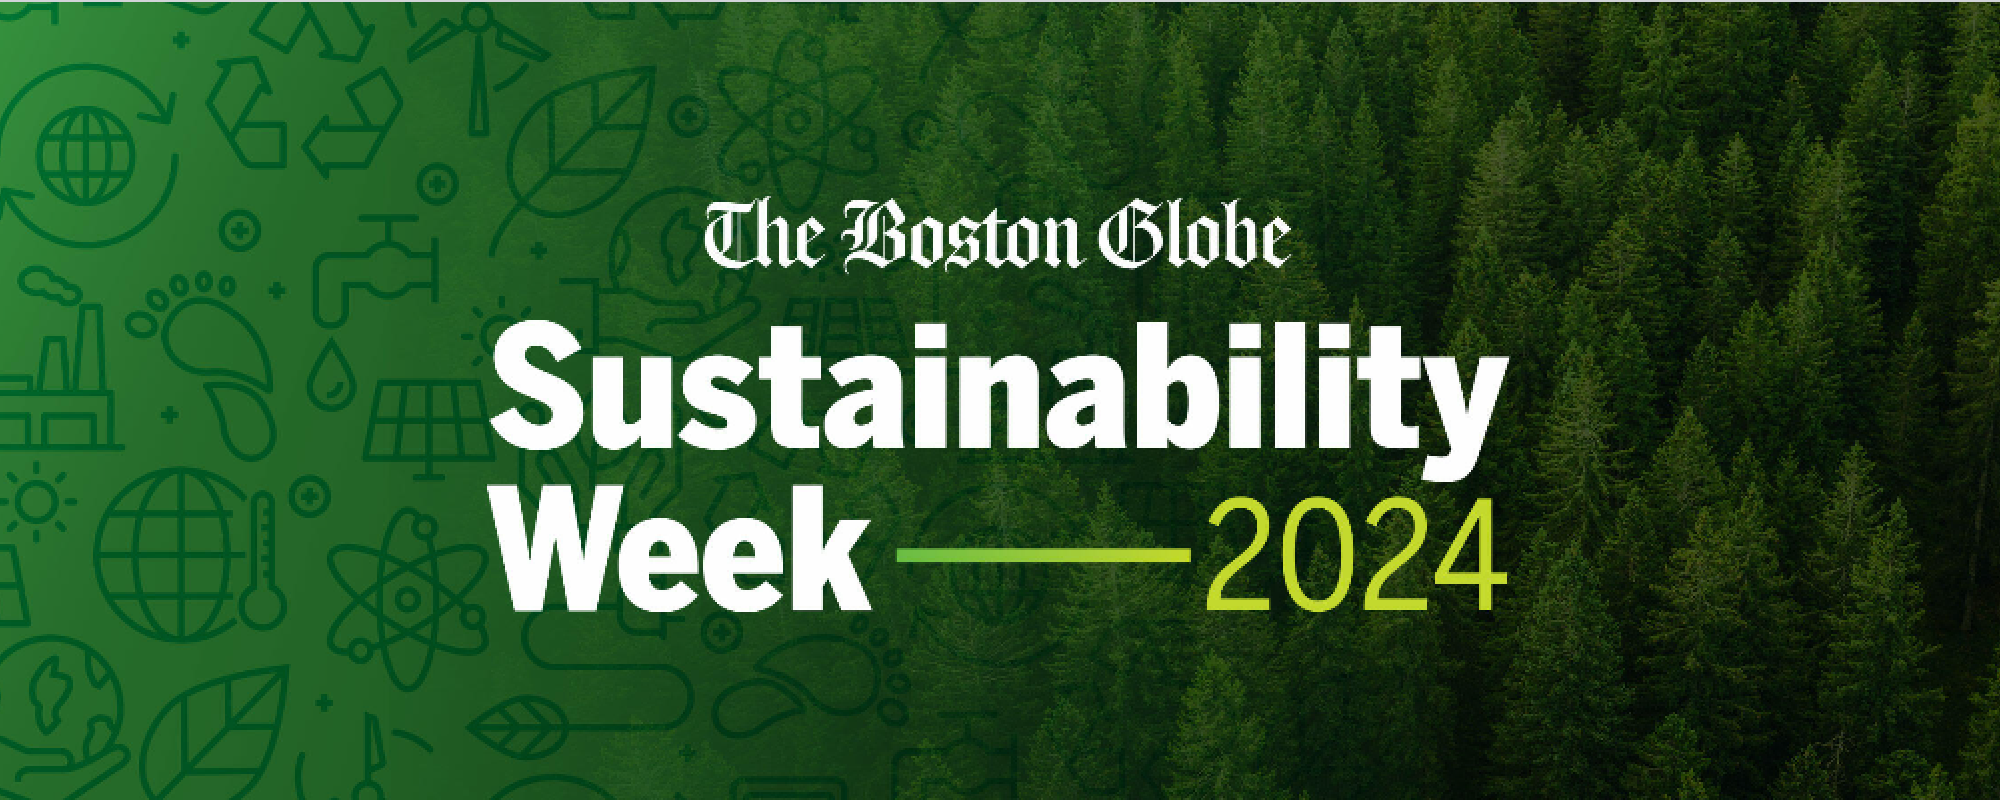 Big Boston globe sustainability week 2024 header